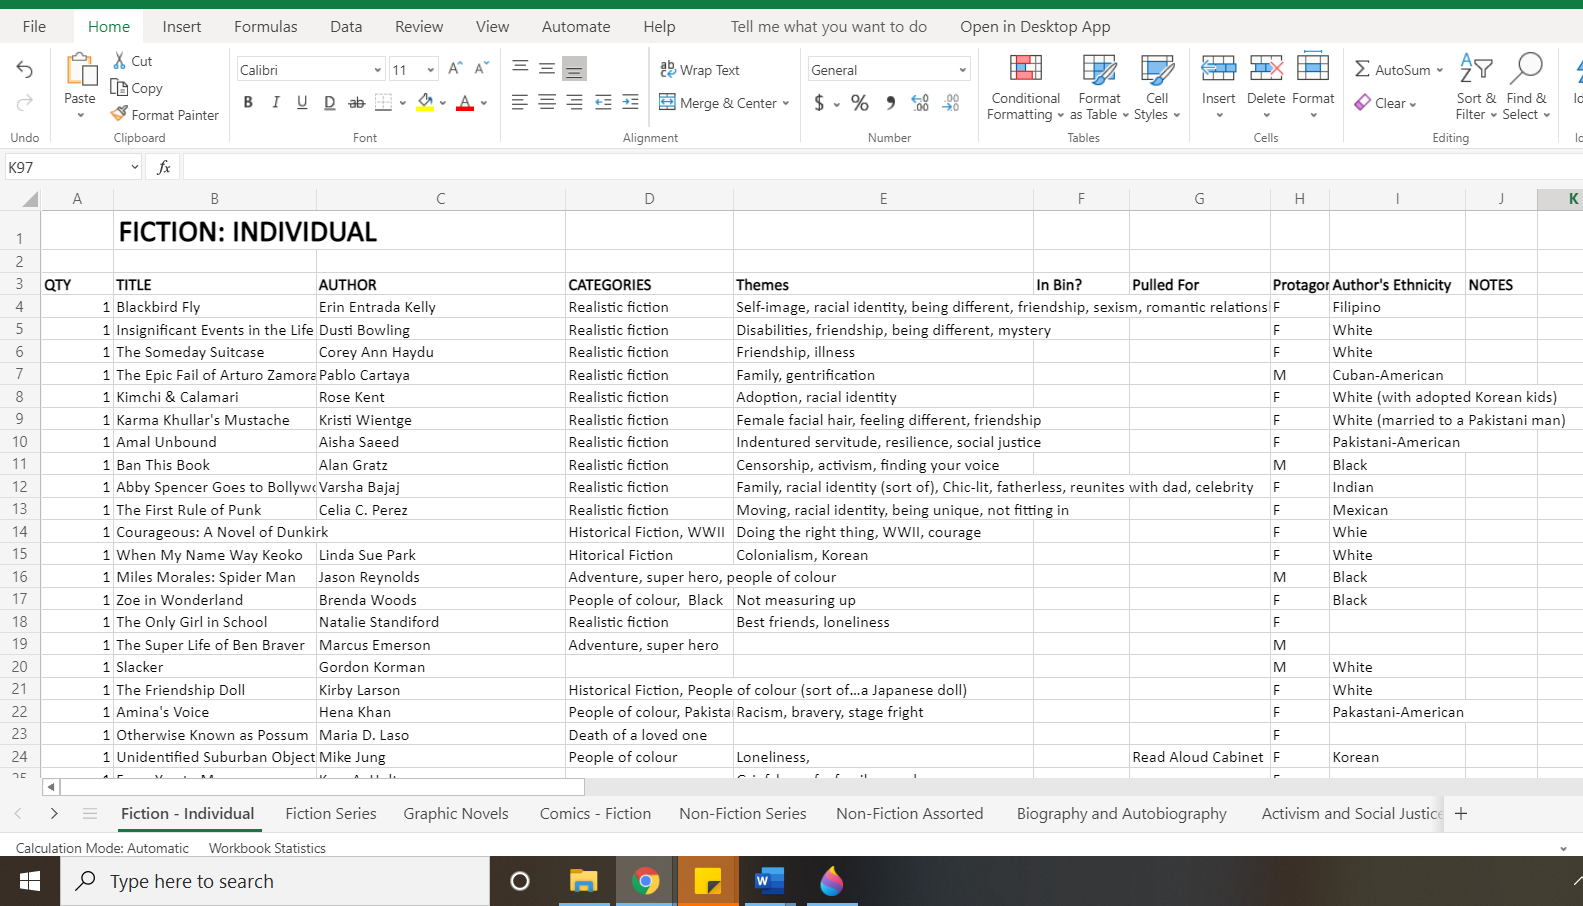 Screenshot of my classroom library inventory spreadsheet